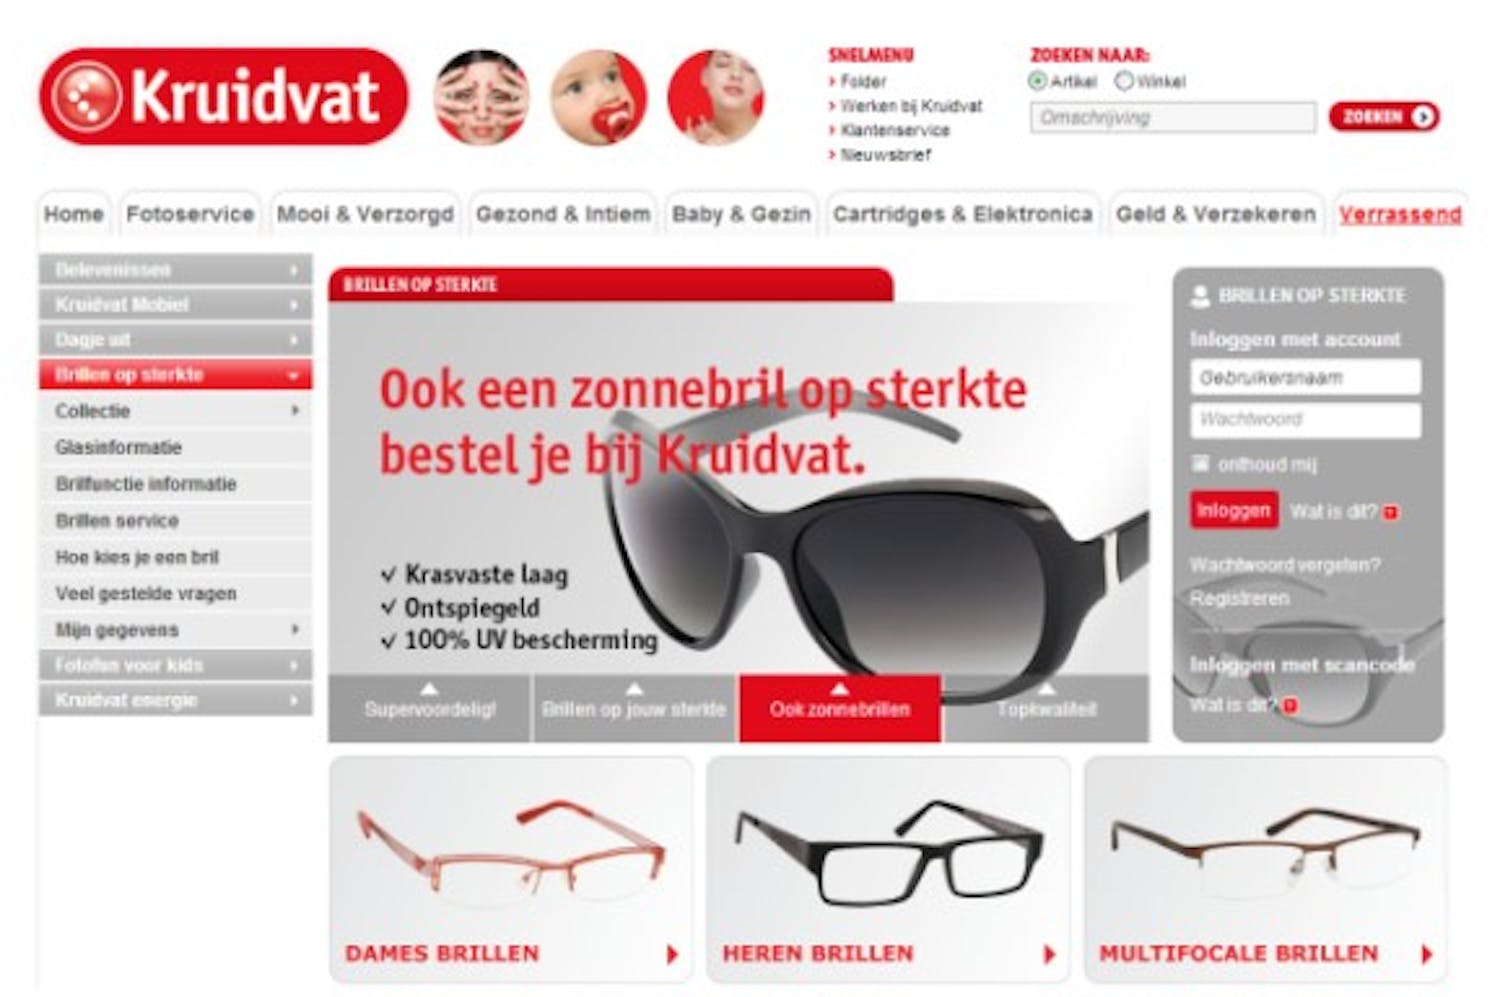 Beer In detail klep Kruidvat breidt webshop uit met brillen op sterkte | BNR Nieuwsradio